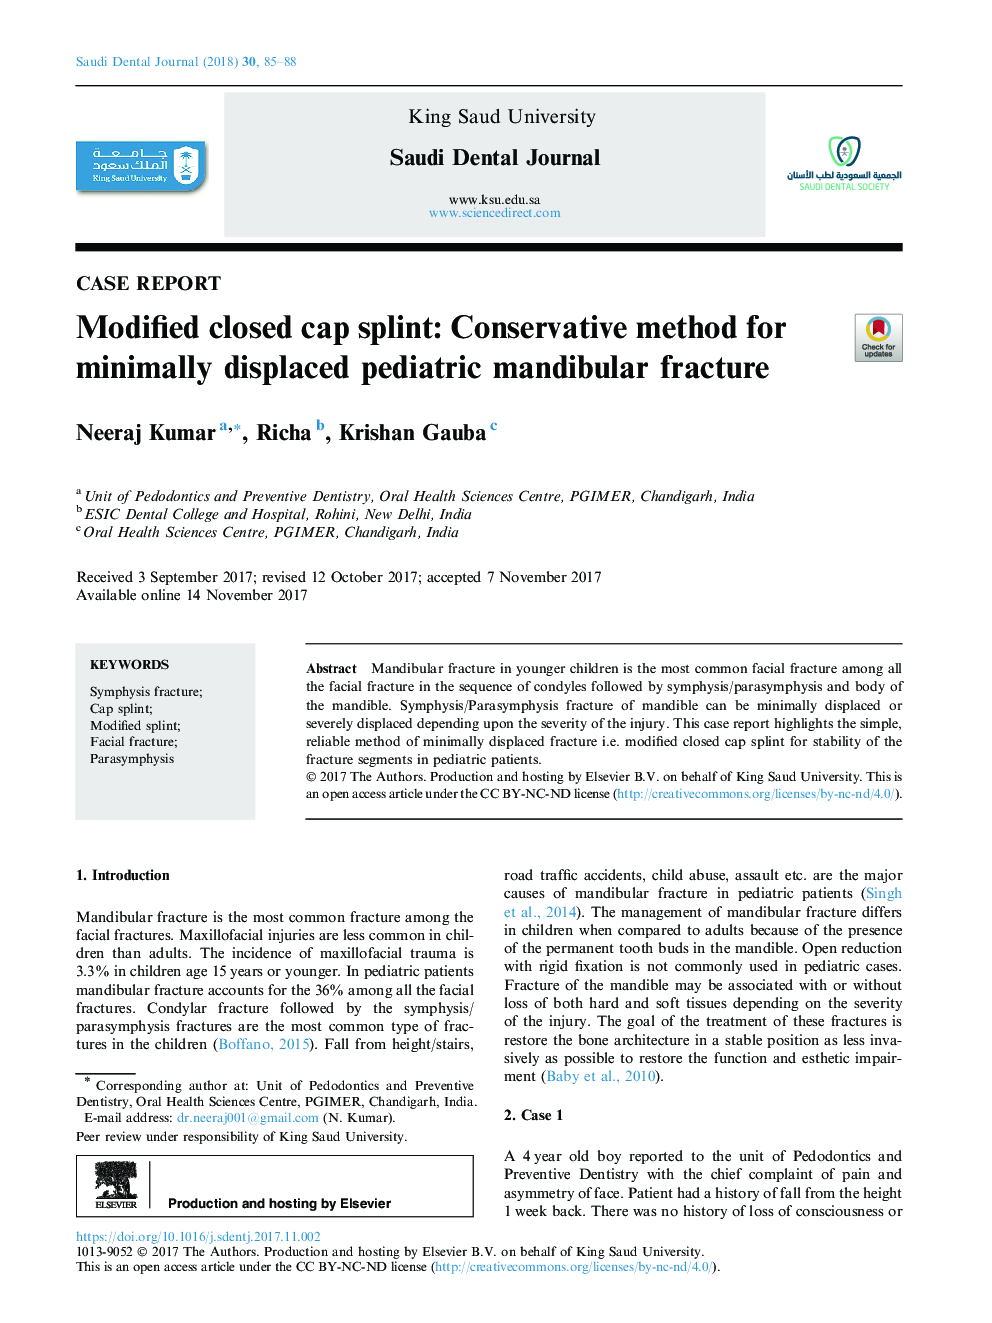 Modified closed cap splint: Conservative method for minimally displaced pediatric mandibular fracture